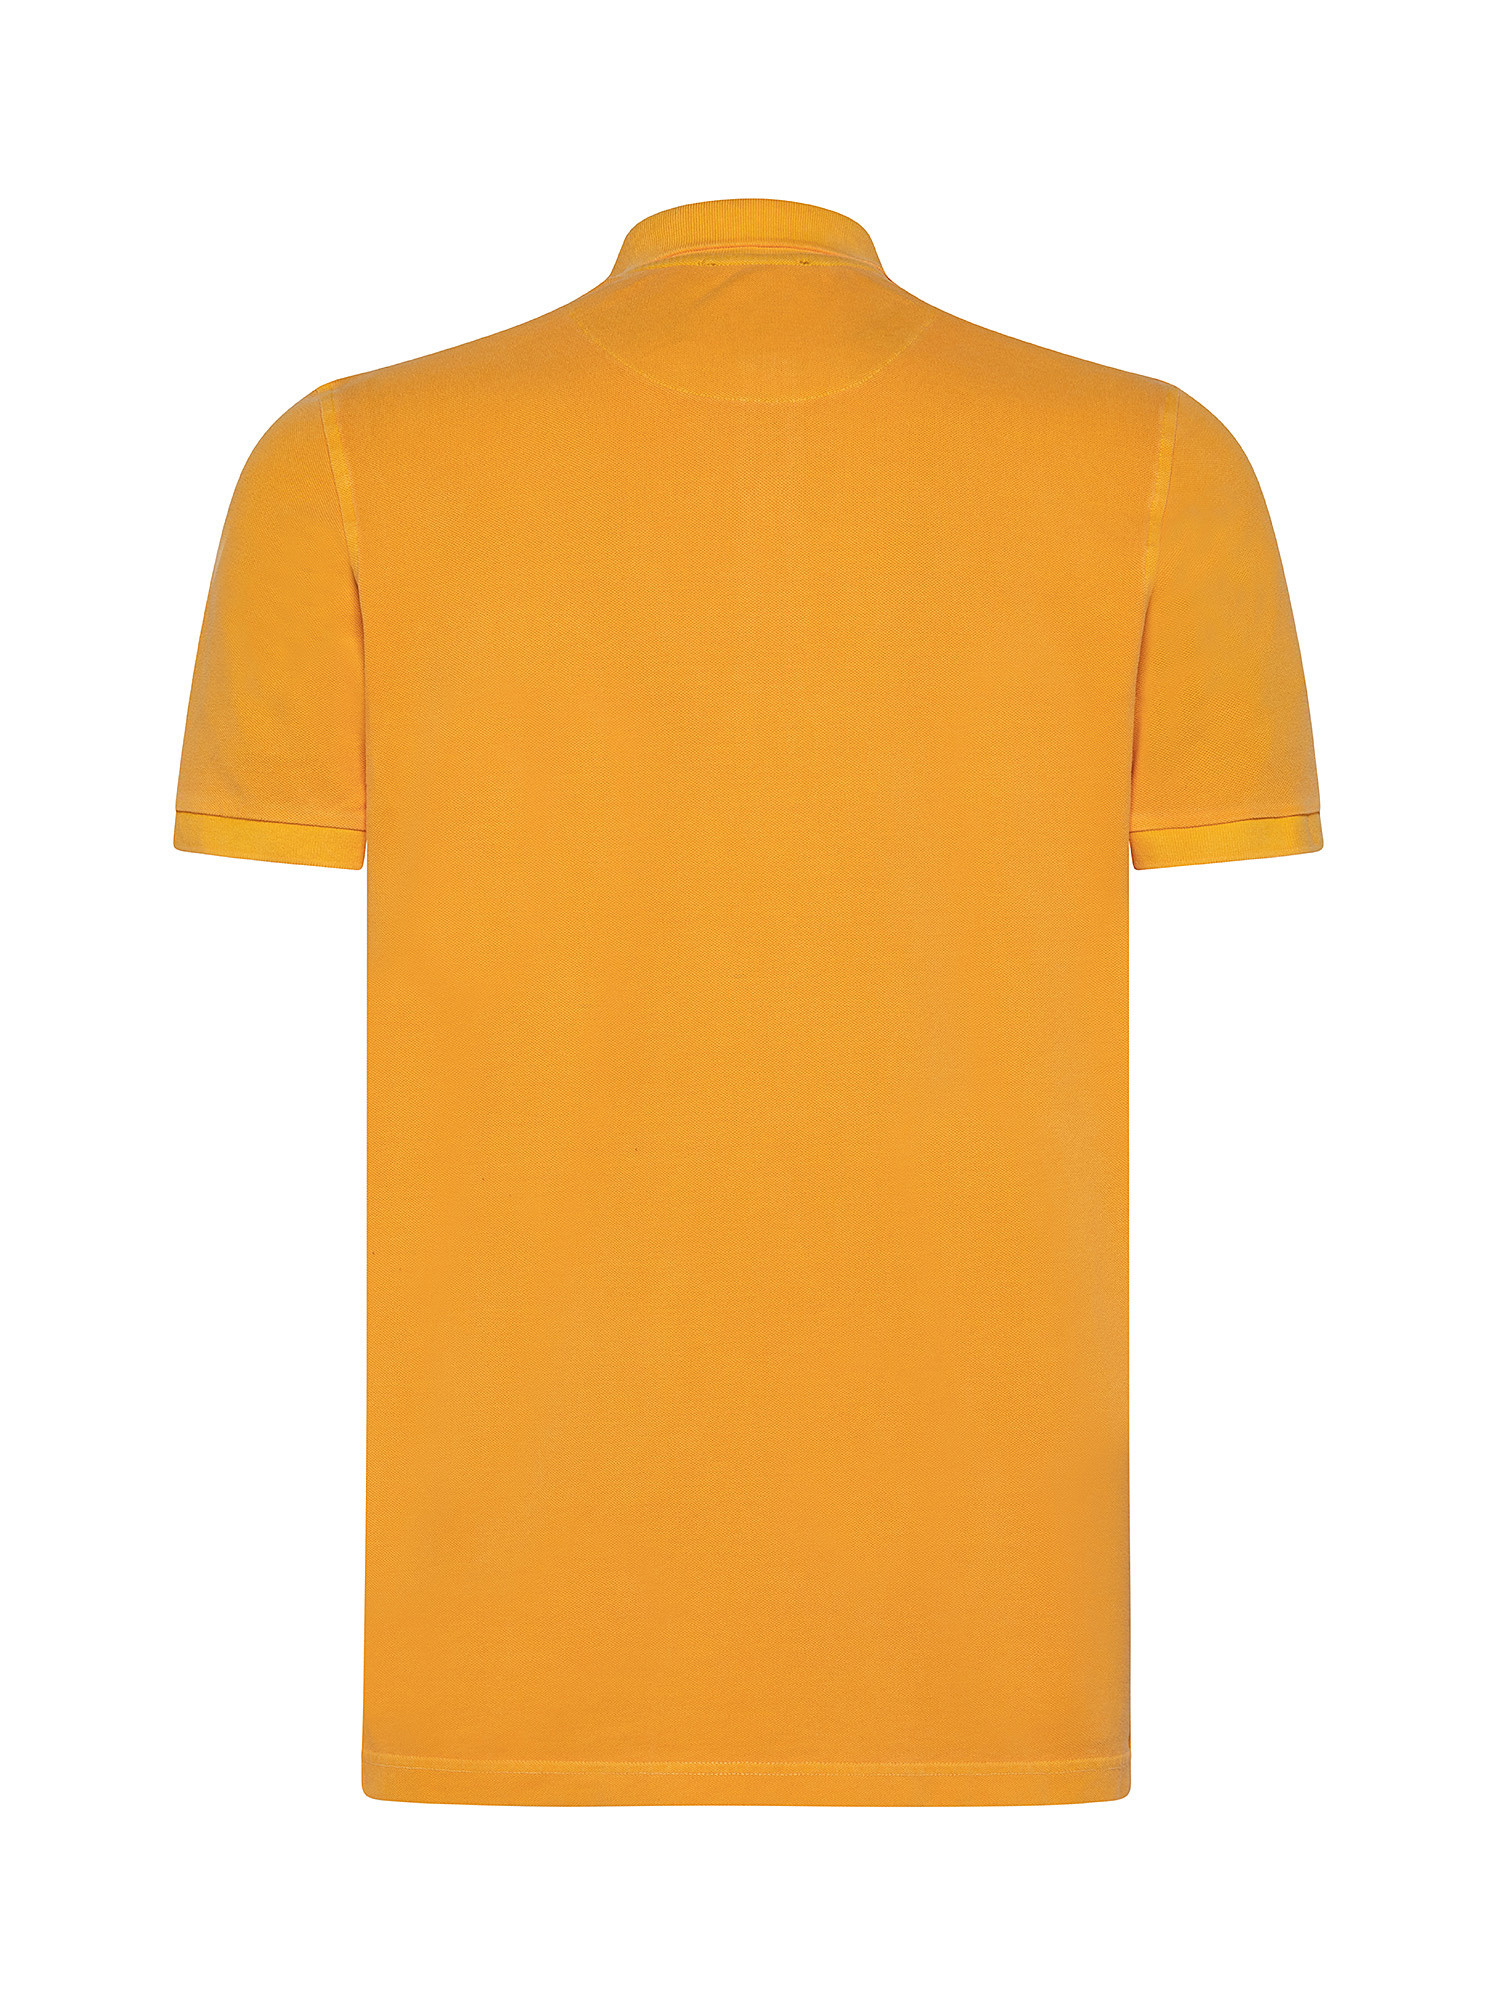 Polo manica corta, Arancione ambra, large image number 1